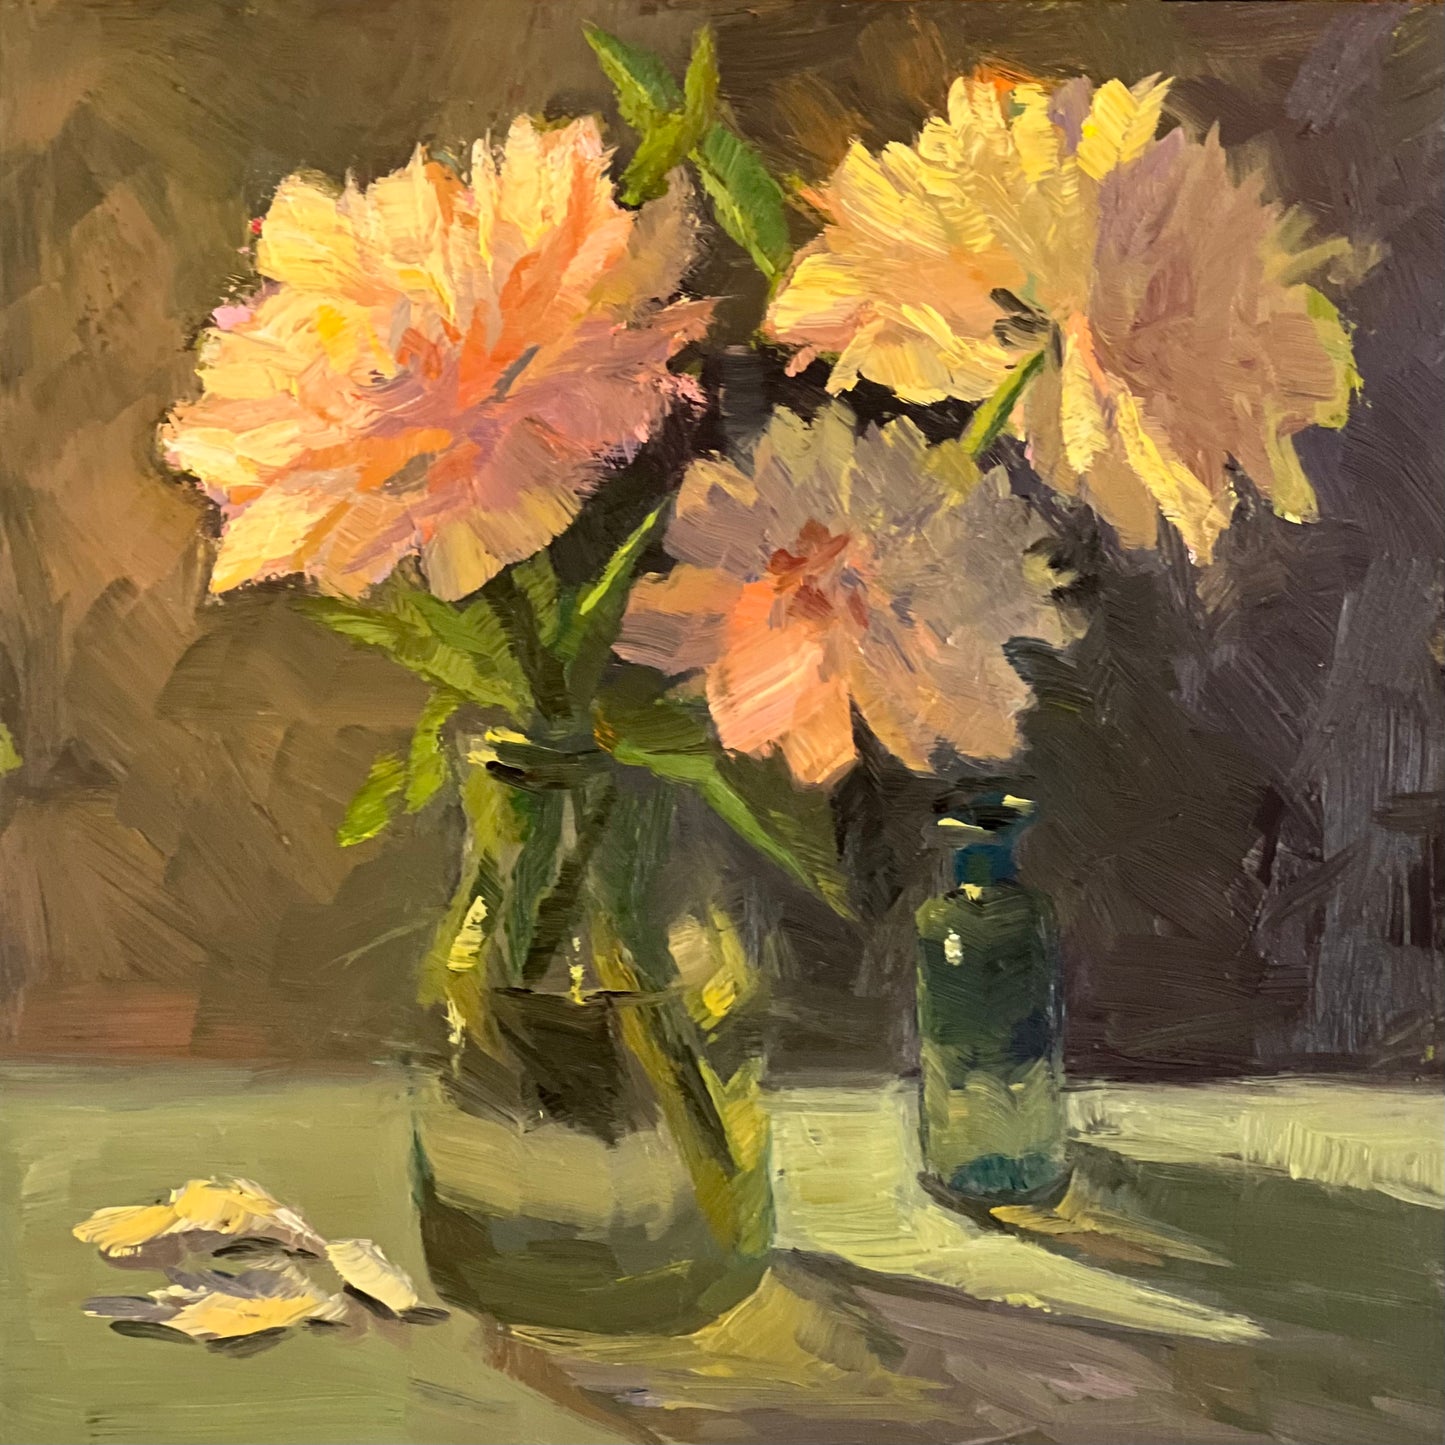 White Peonies in the Spotlight - Original Oil Painting of Flowers